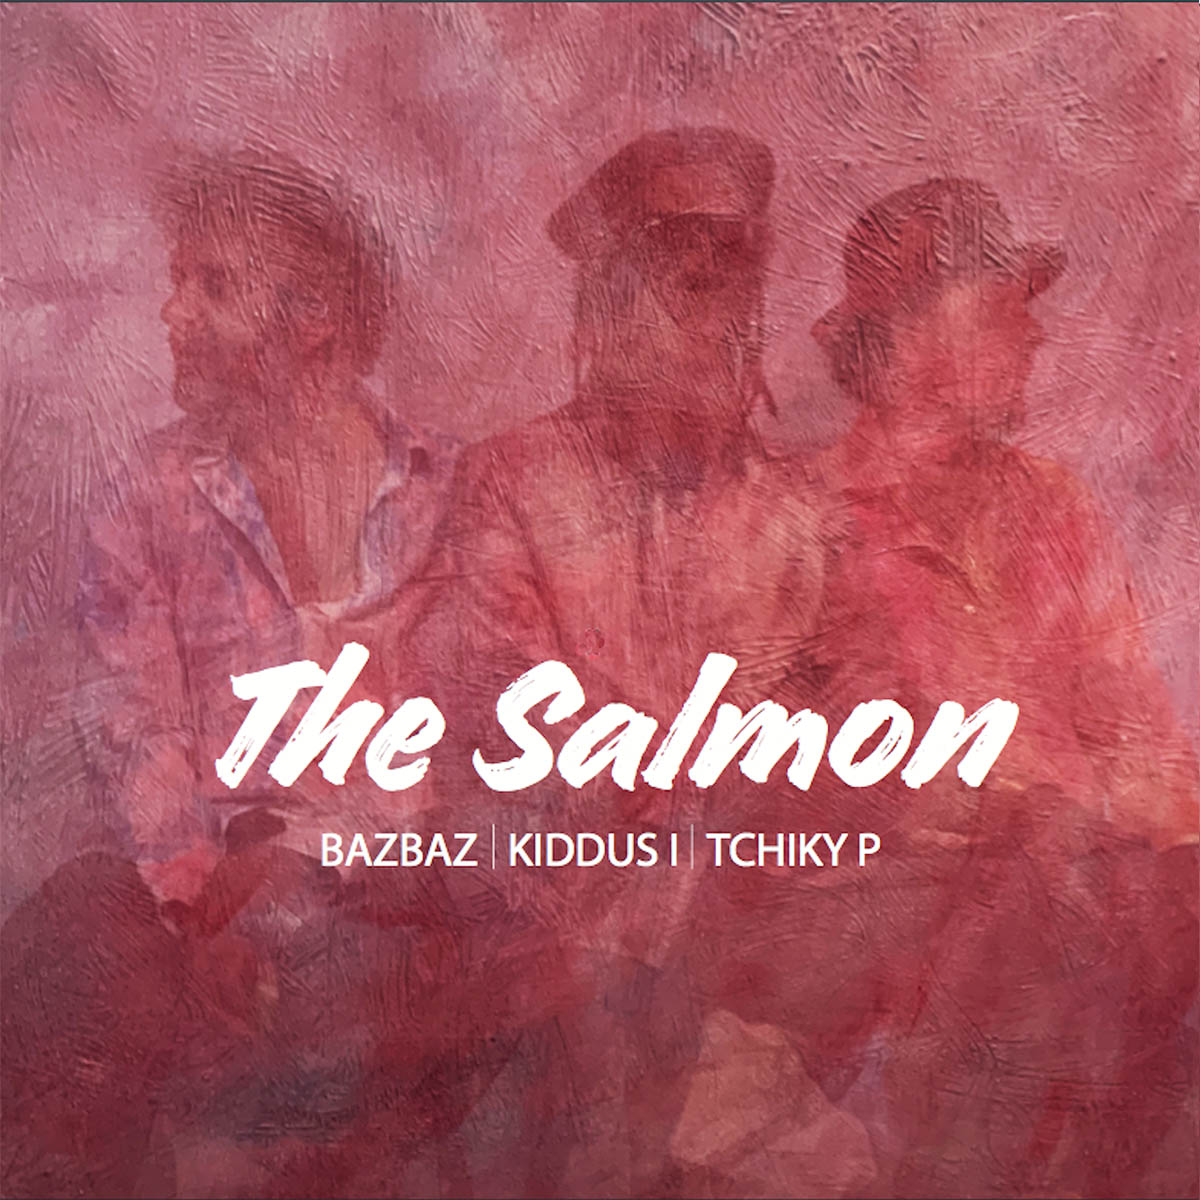 The Salmon